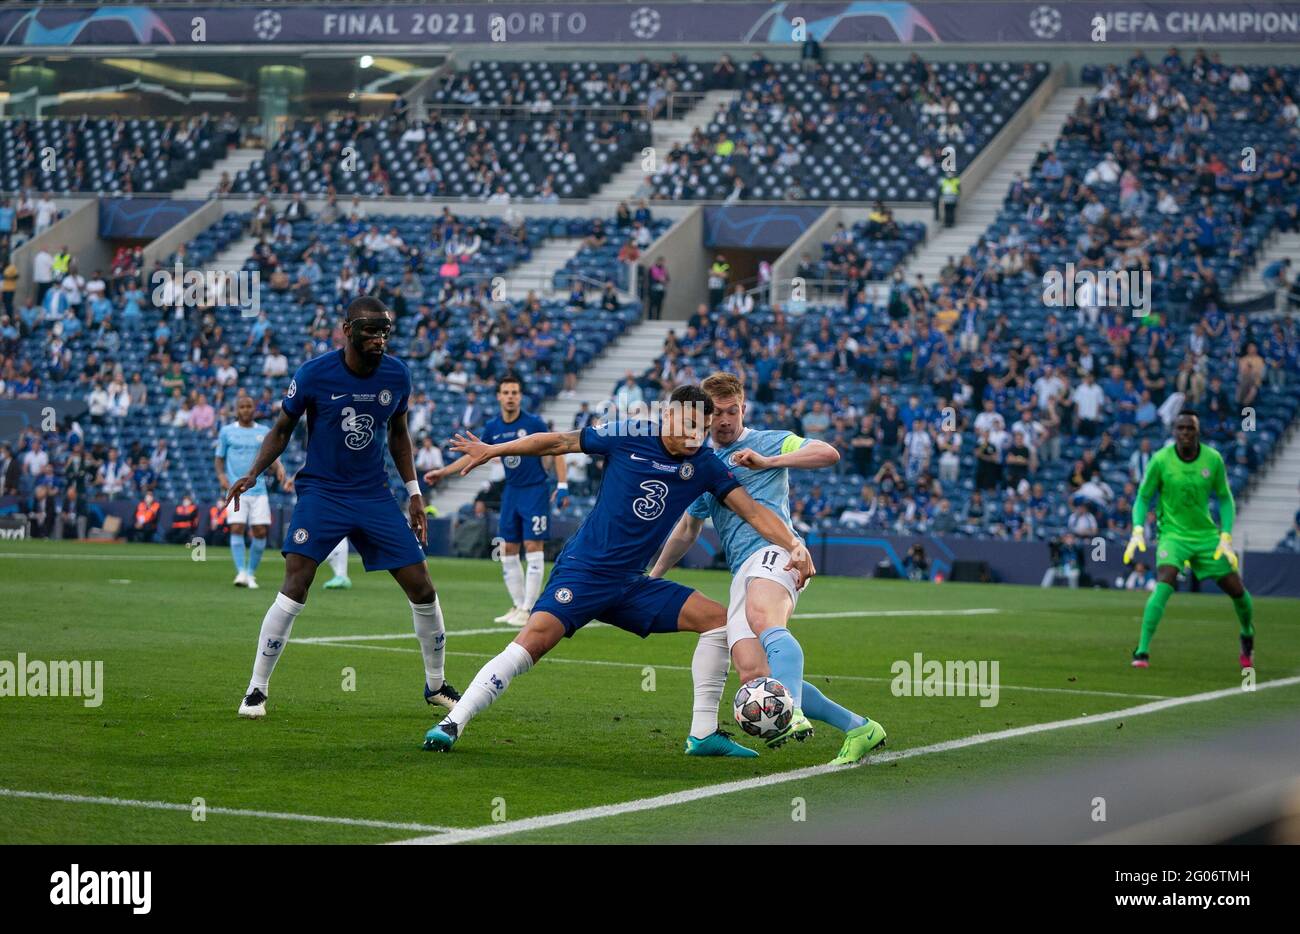 Final da Champions League - Manchester City x Chelsea - 29/05/2021 -  Esporte - Fotografia - Folha de S.Paulo